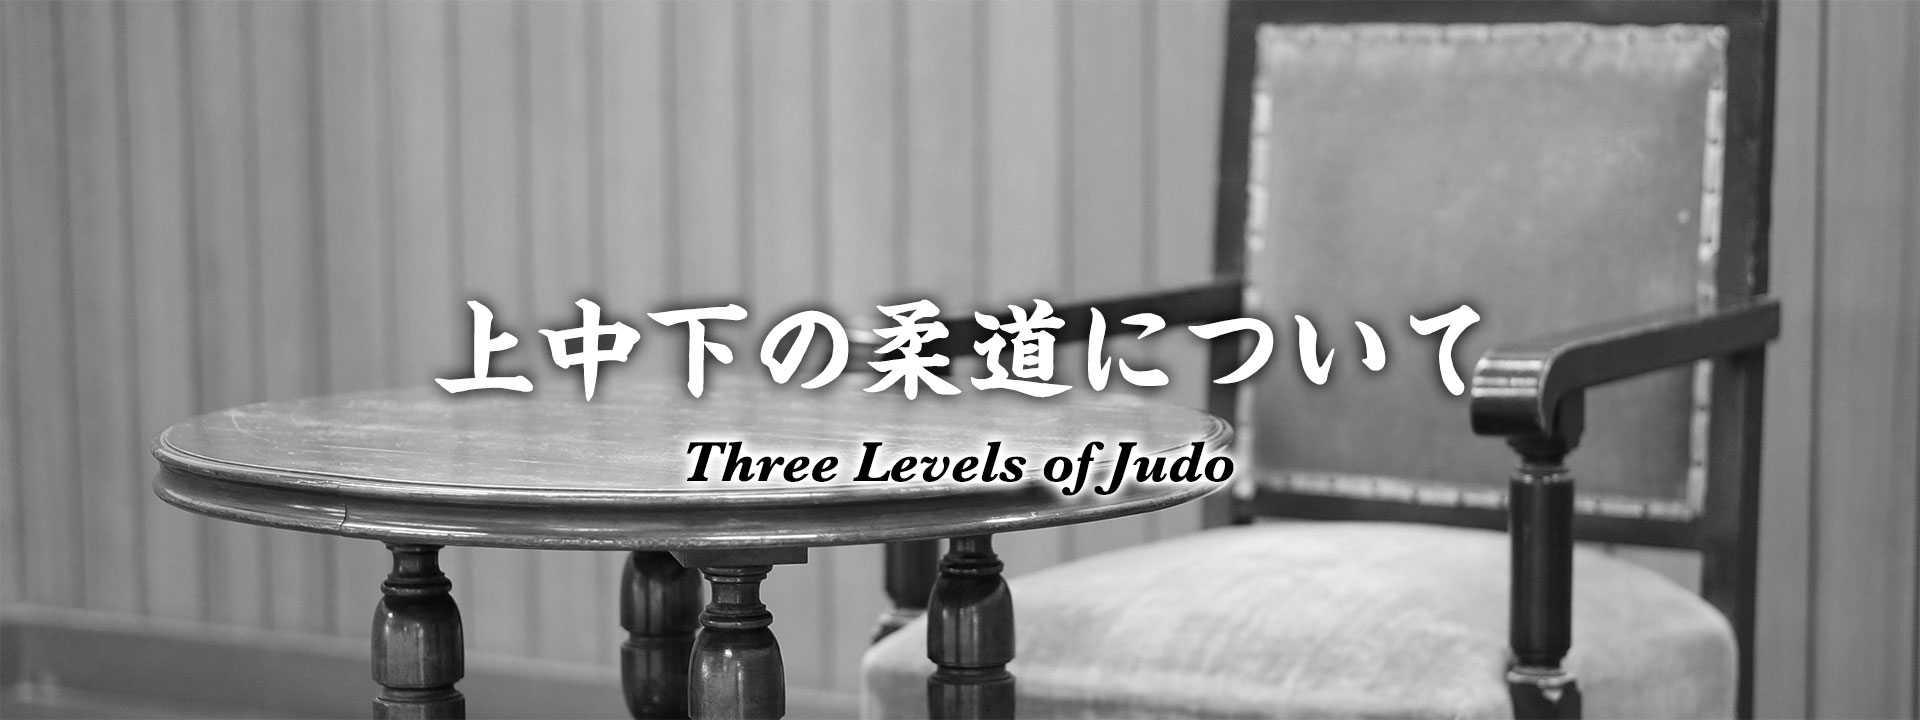 Three Levels of Judo